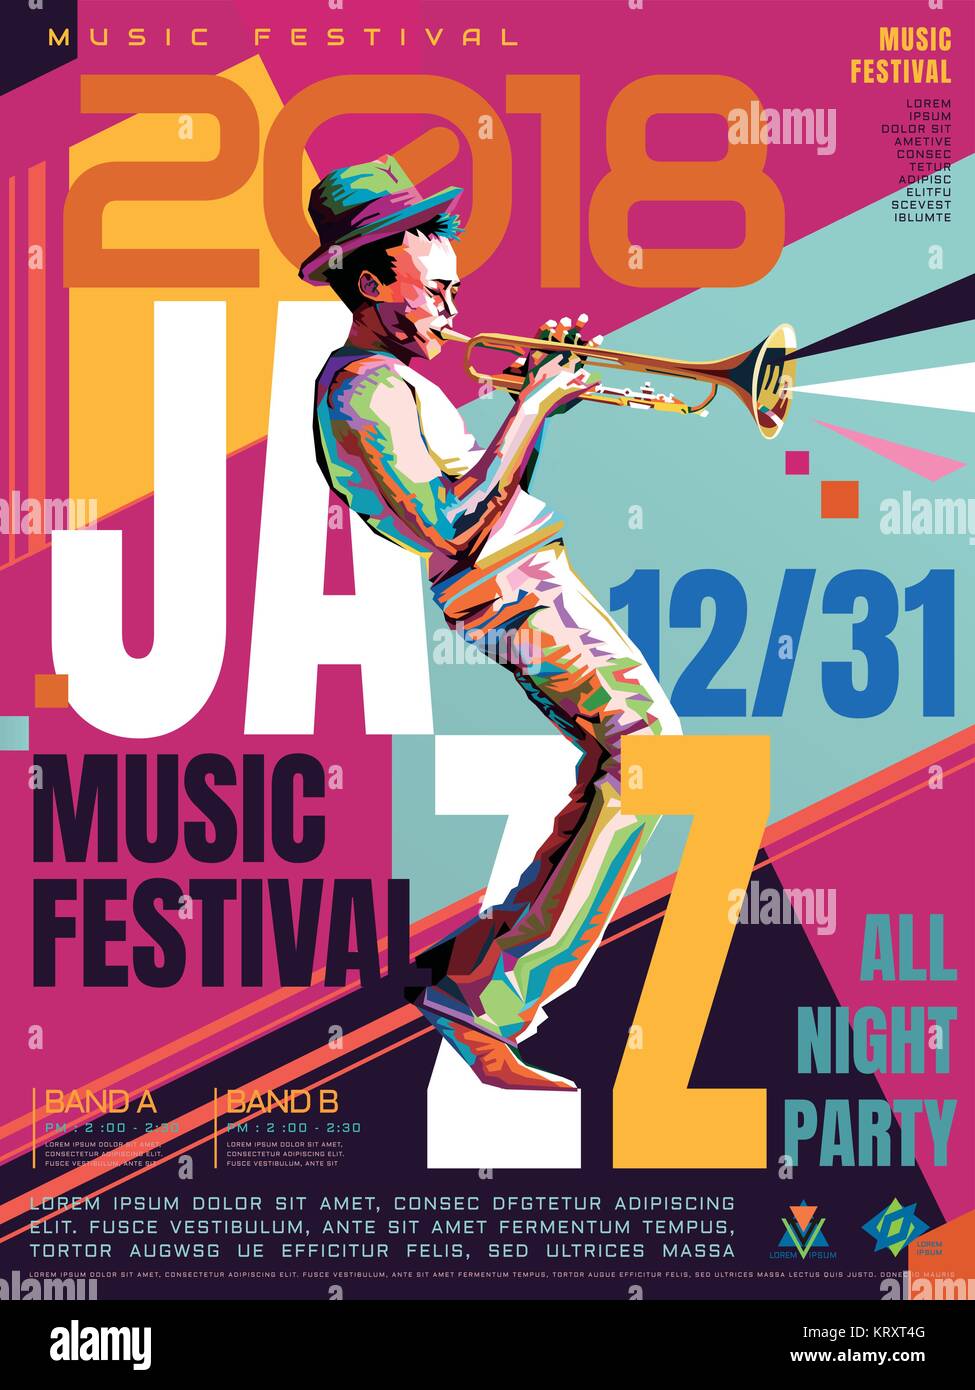 Jazz all night poster, music festival design in WPAP style, pop art portrait for trumpet performance Stock Vector